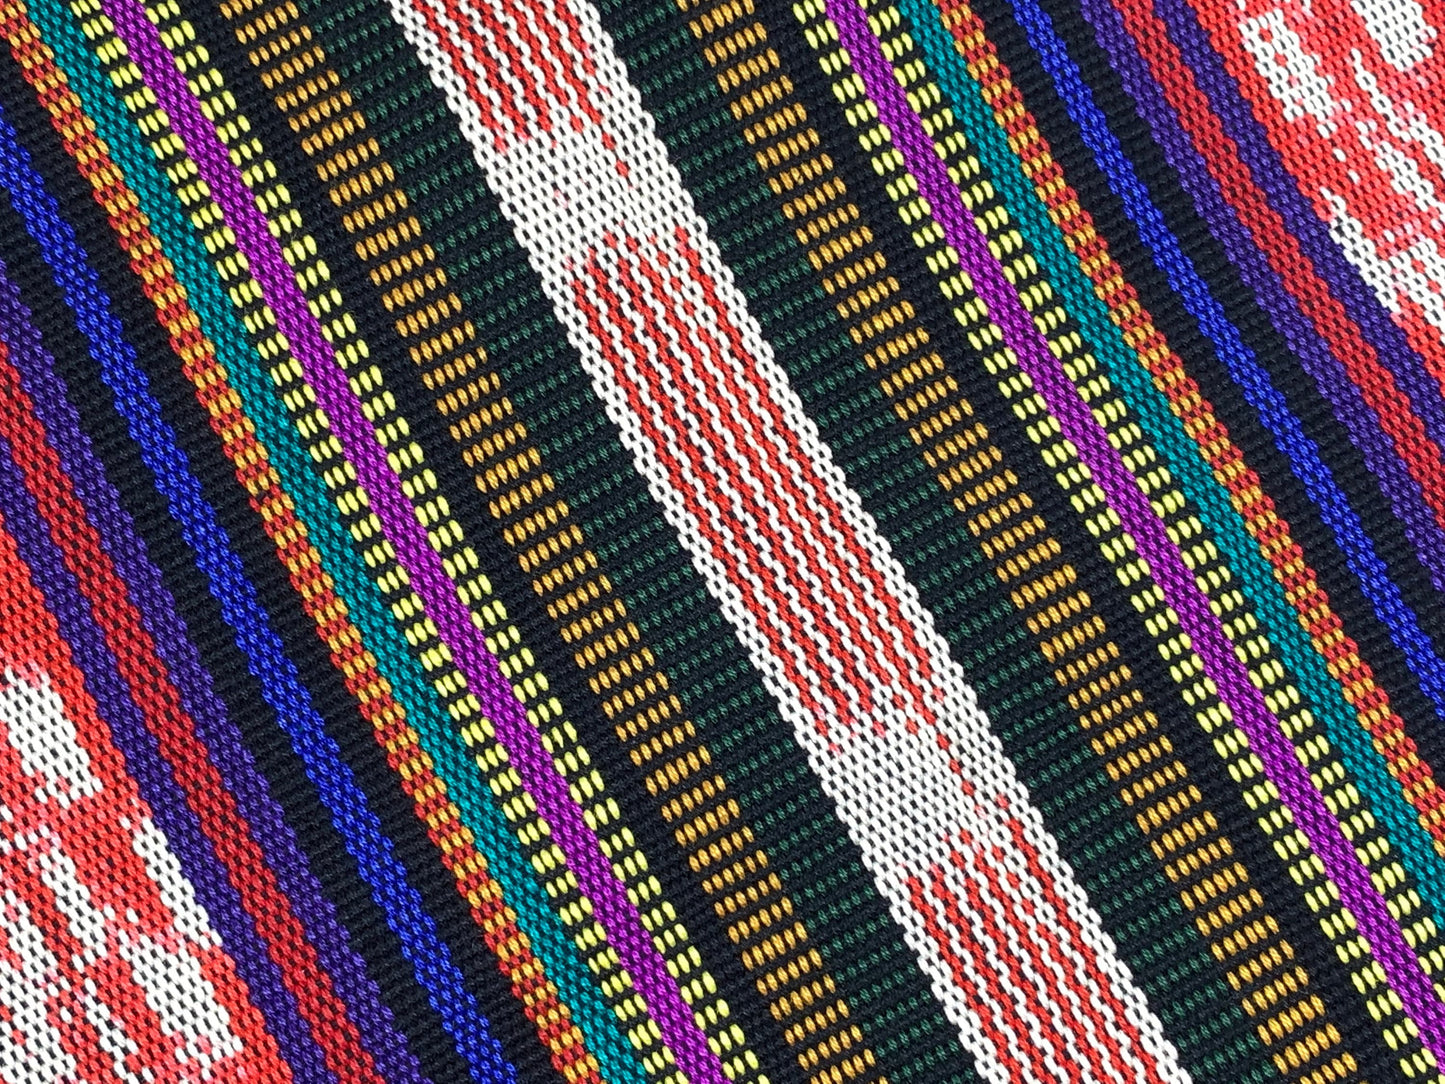 Guatemalan Handwoven Red Ikat Stripes